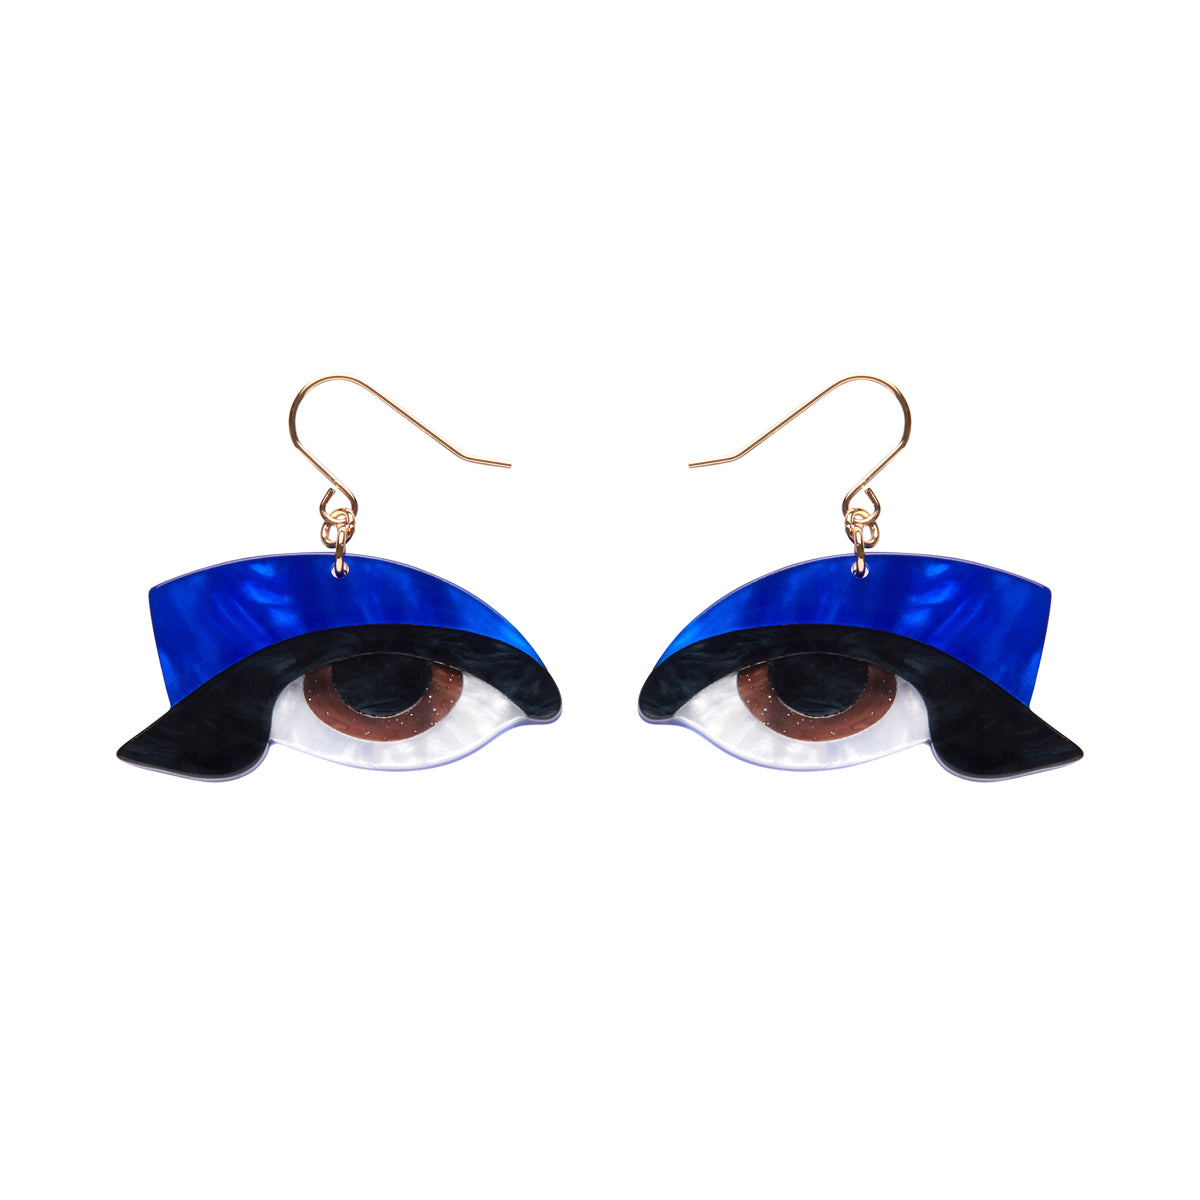 pair Erstwilder's Spellbound collection "Hypnotic Gaze" blue-eyeshadowed brown eyes layered resin dangle earrings